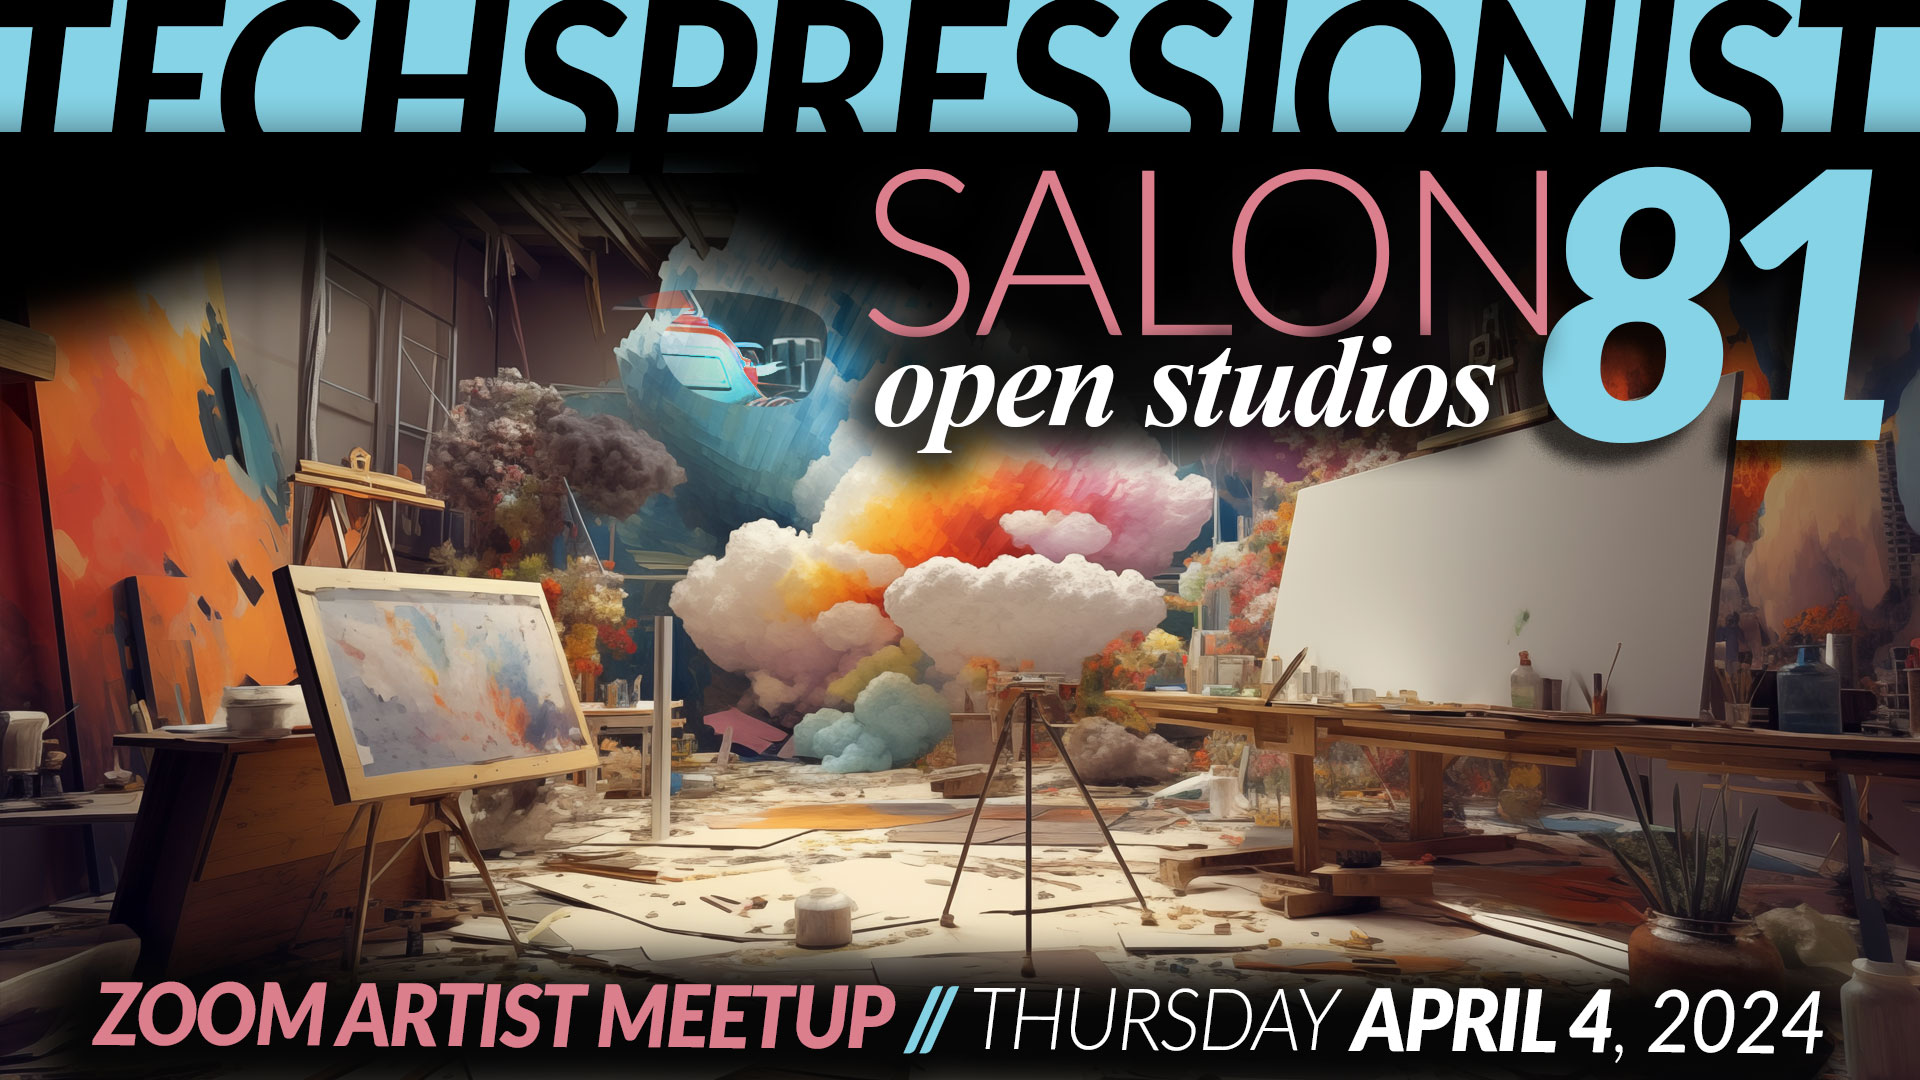 Techspressionist Salon 81